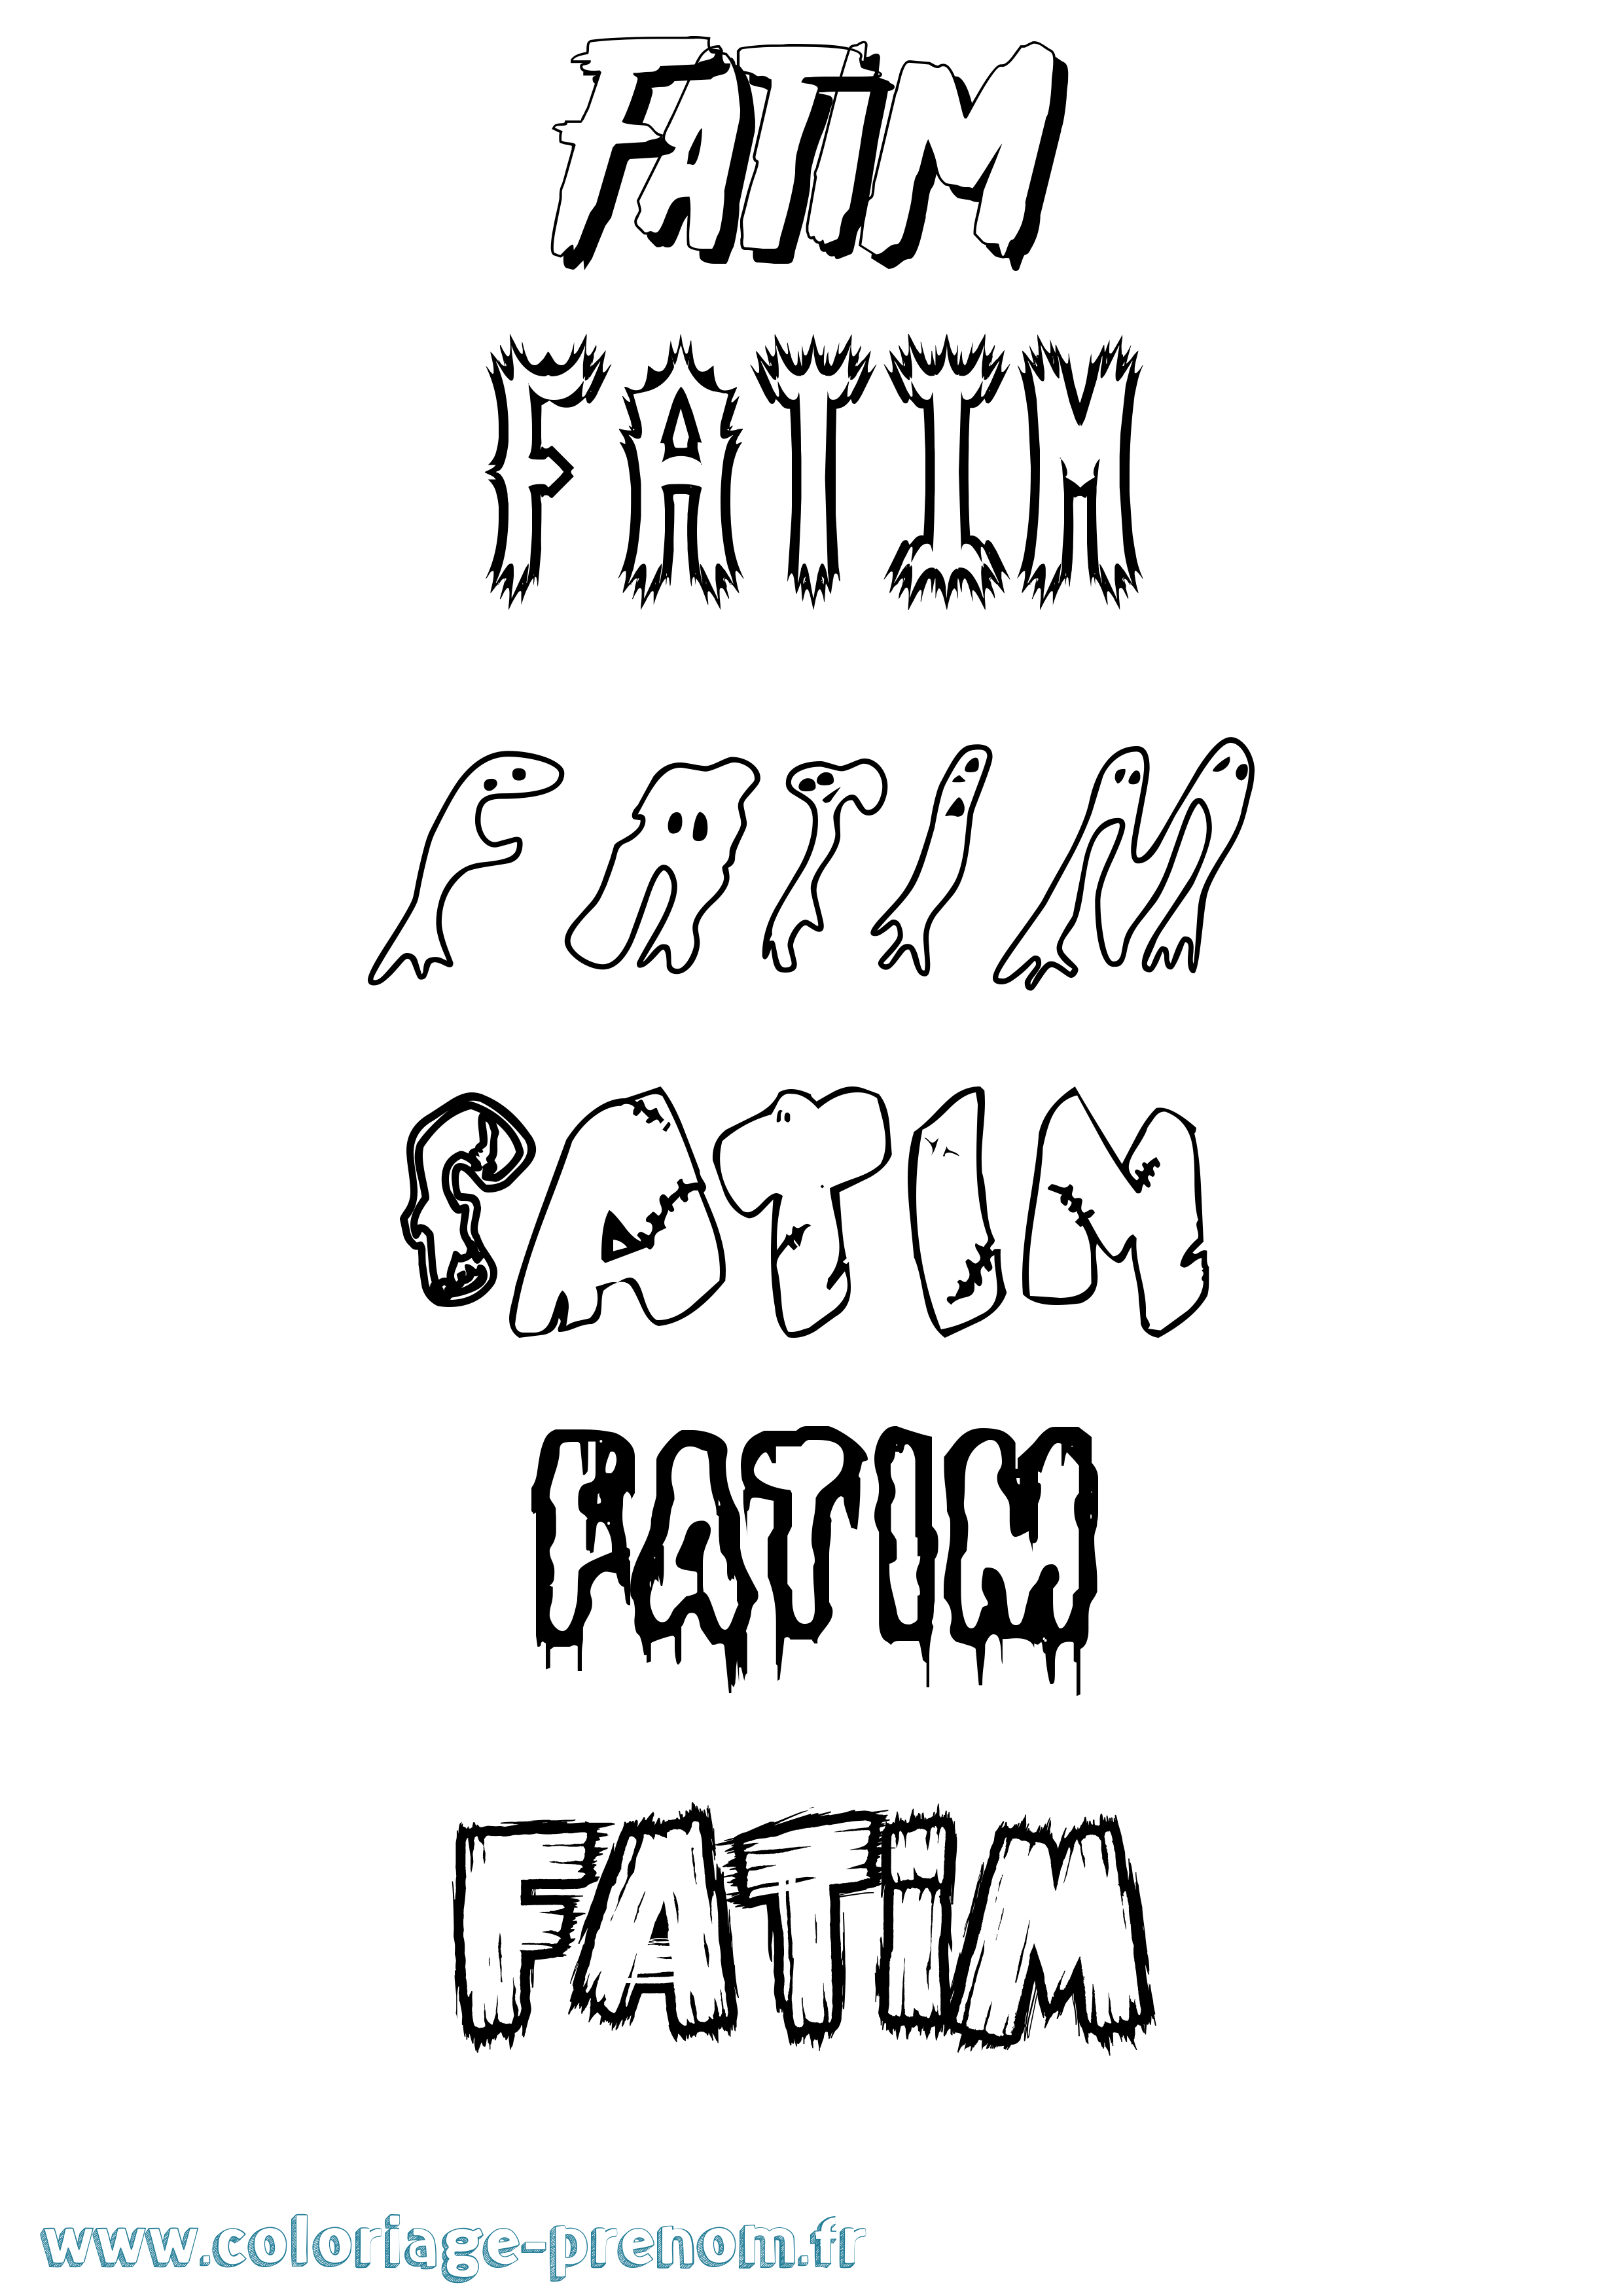 Coloriage prénom Fatim